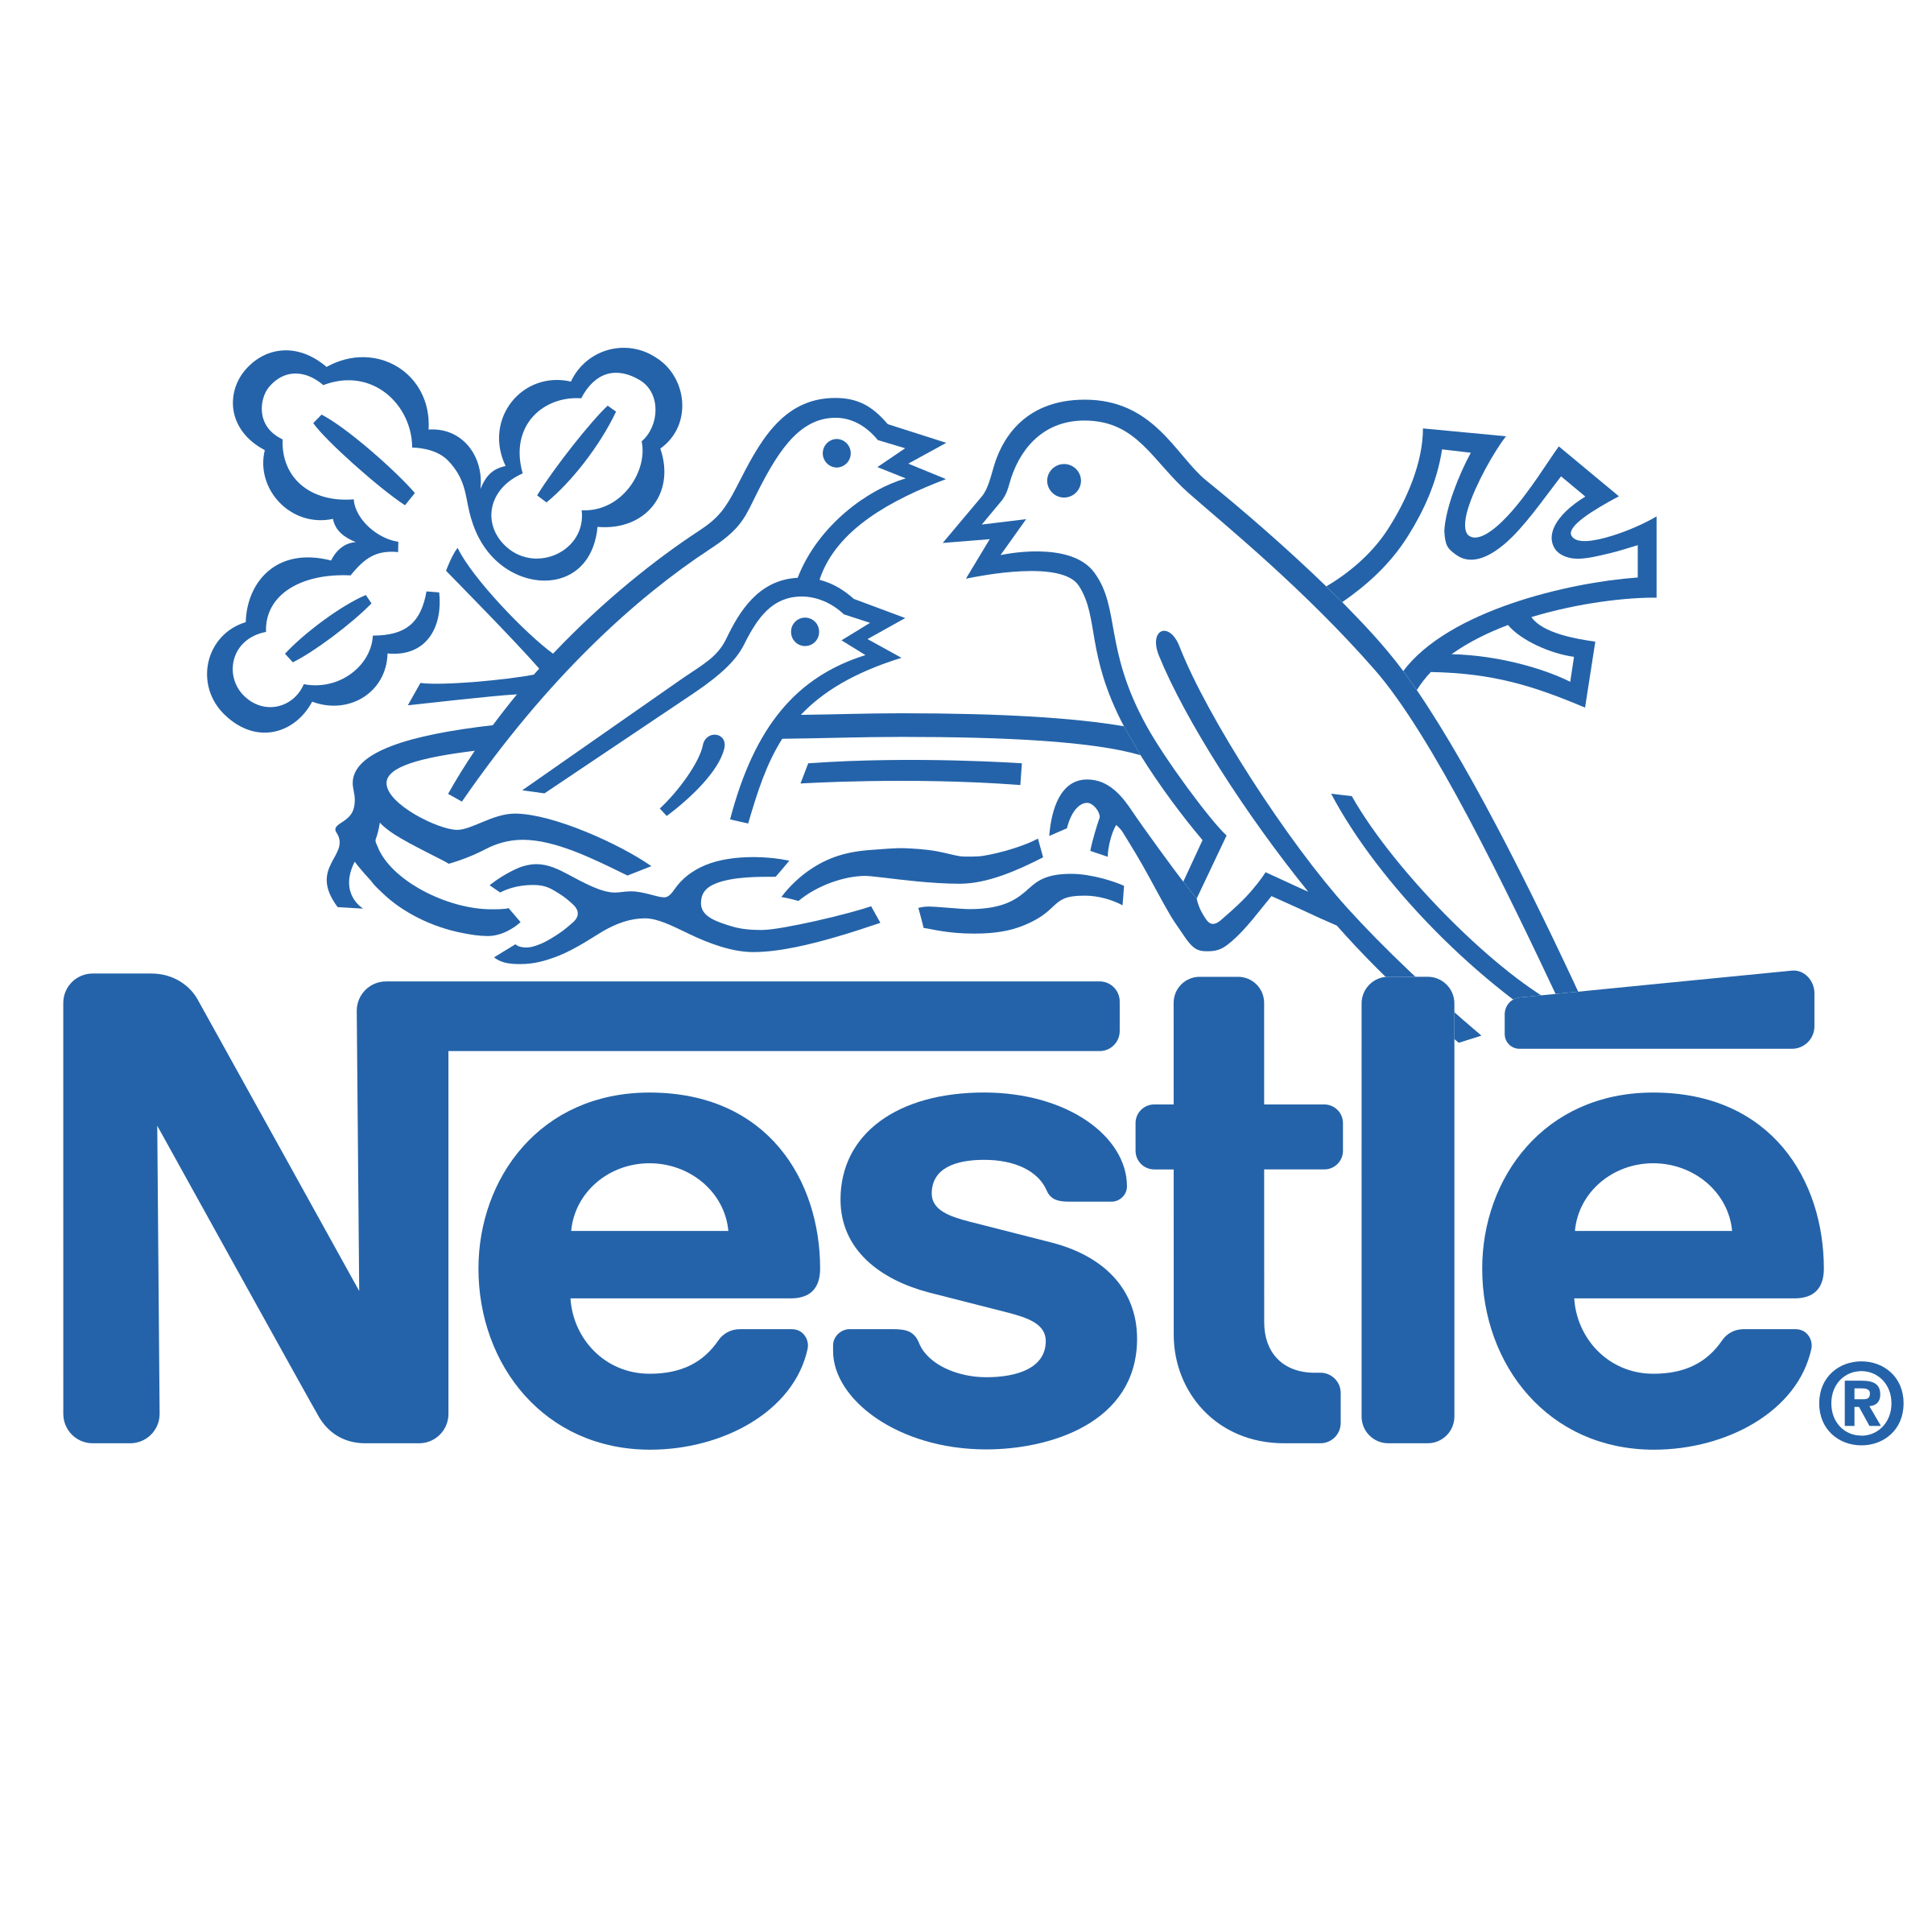 Nestle Chocolate Logo Png Tra